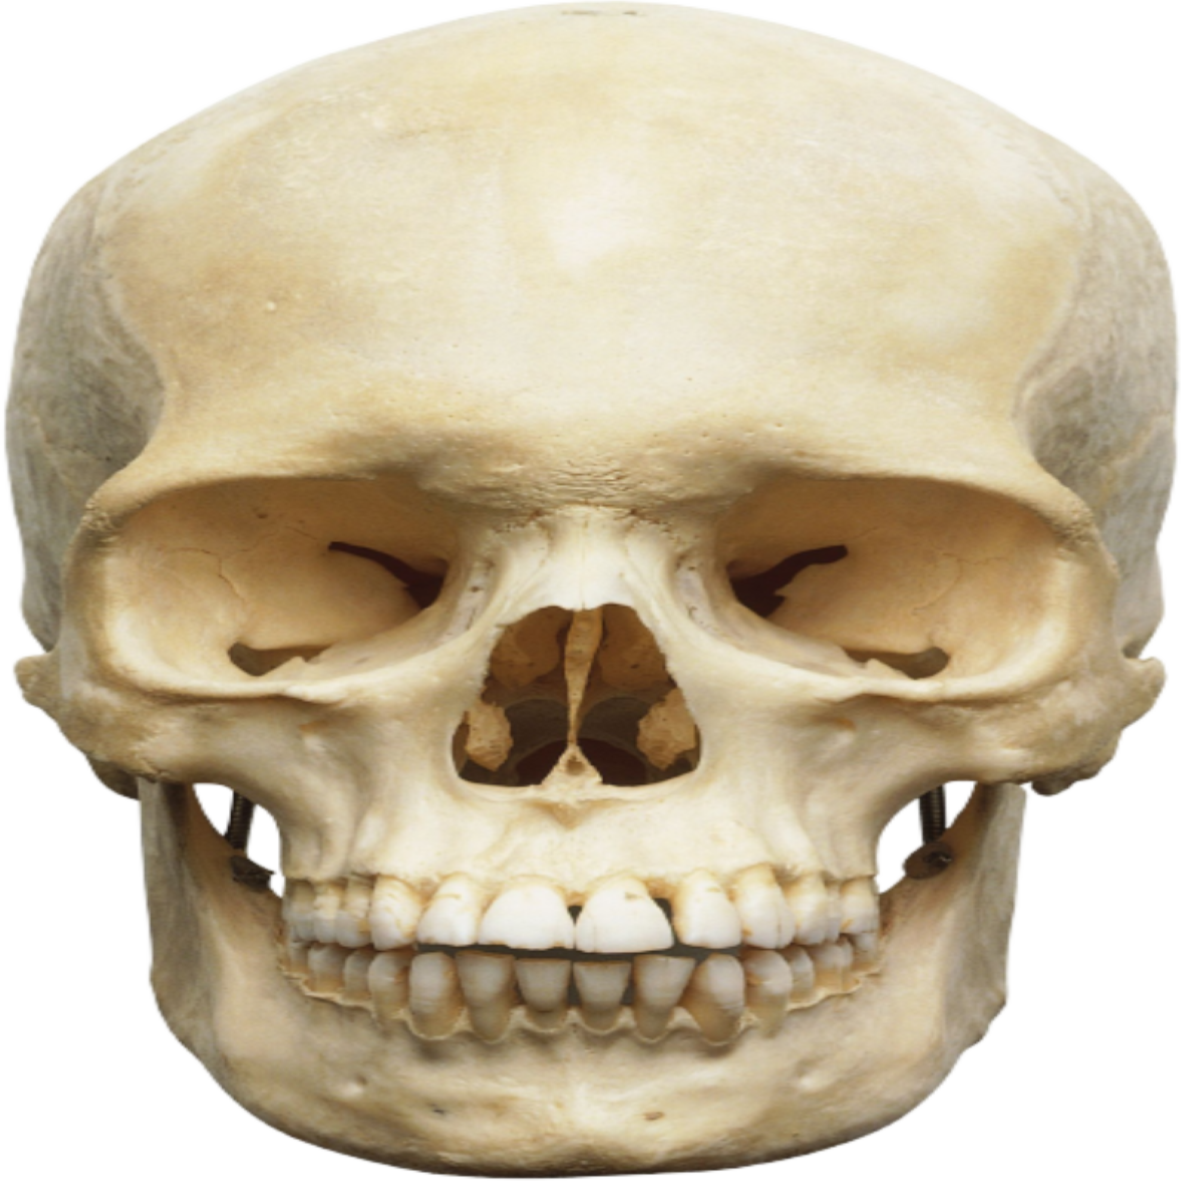 The Bone Snatcher - Wikipedia